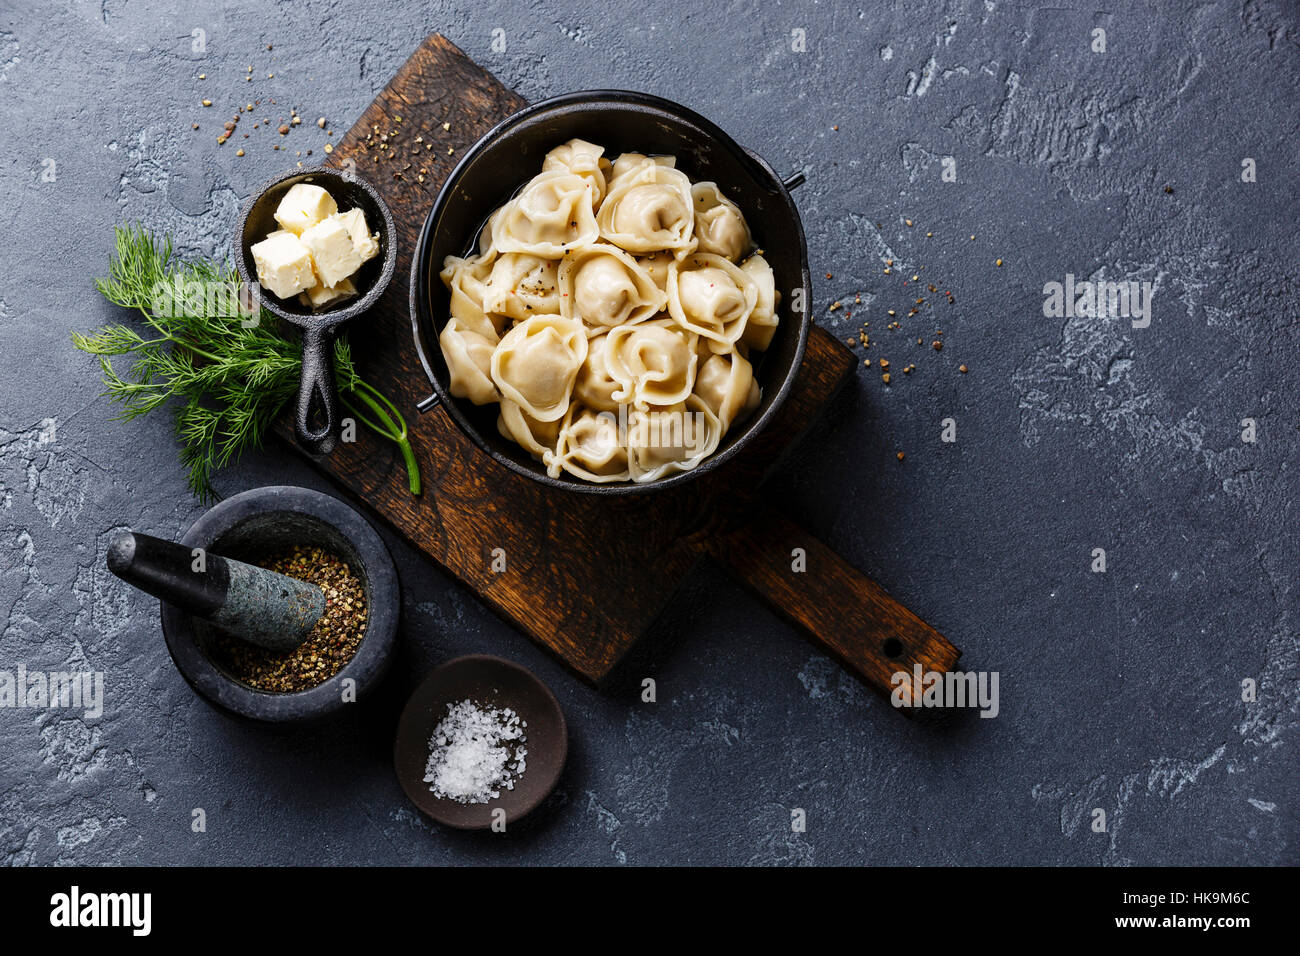 Russian pelmeni meat Dumplings with butter in black iron pot on dark stone background copy space Stock Photo